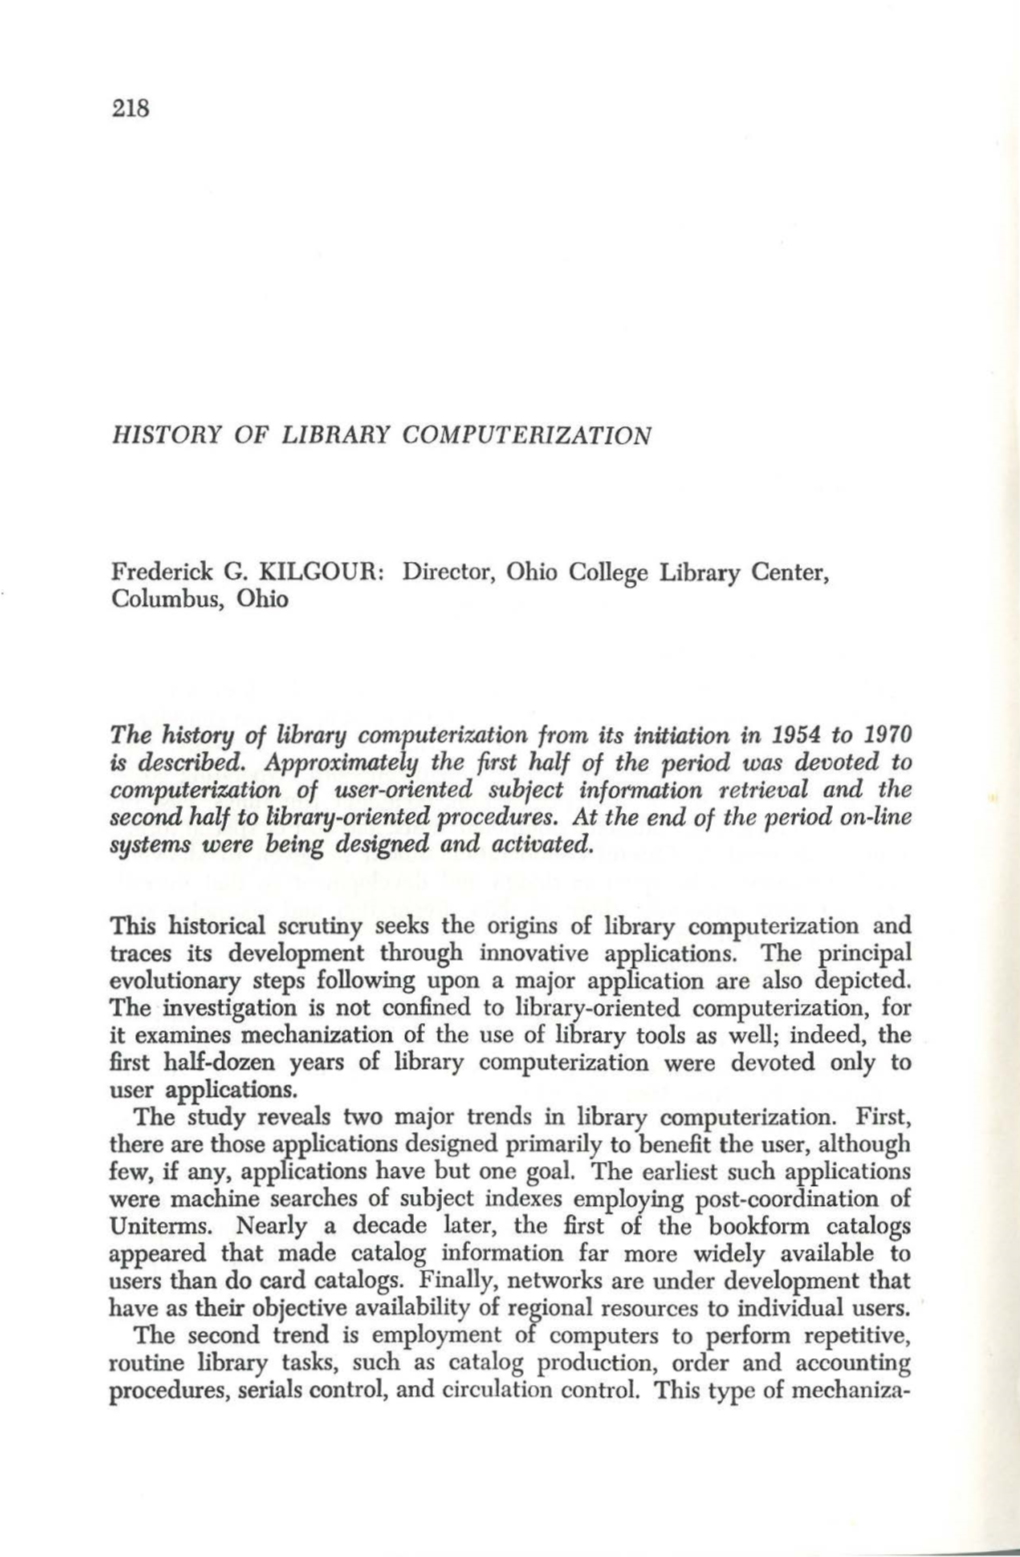 History of Library Computerization